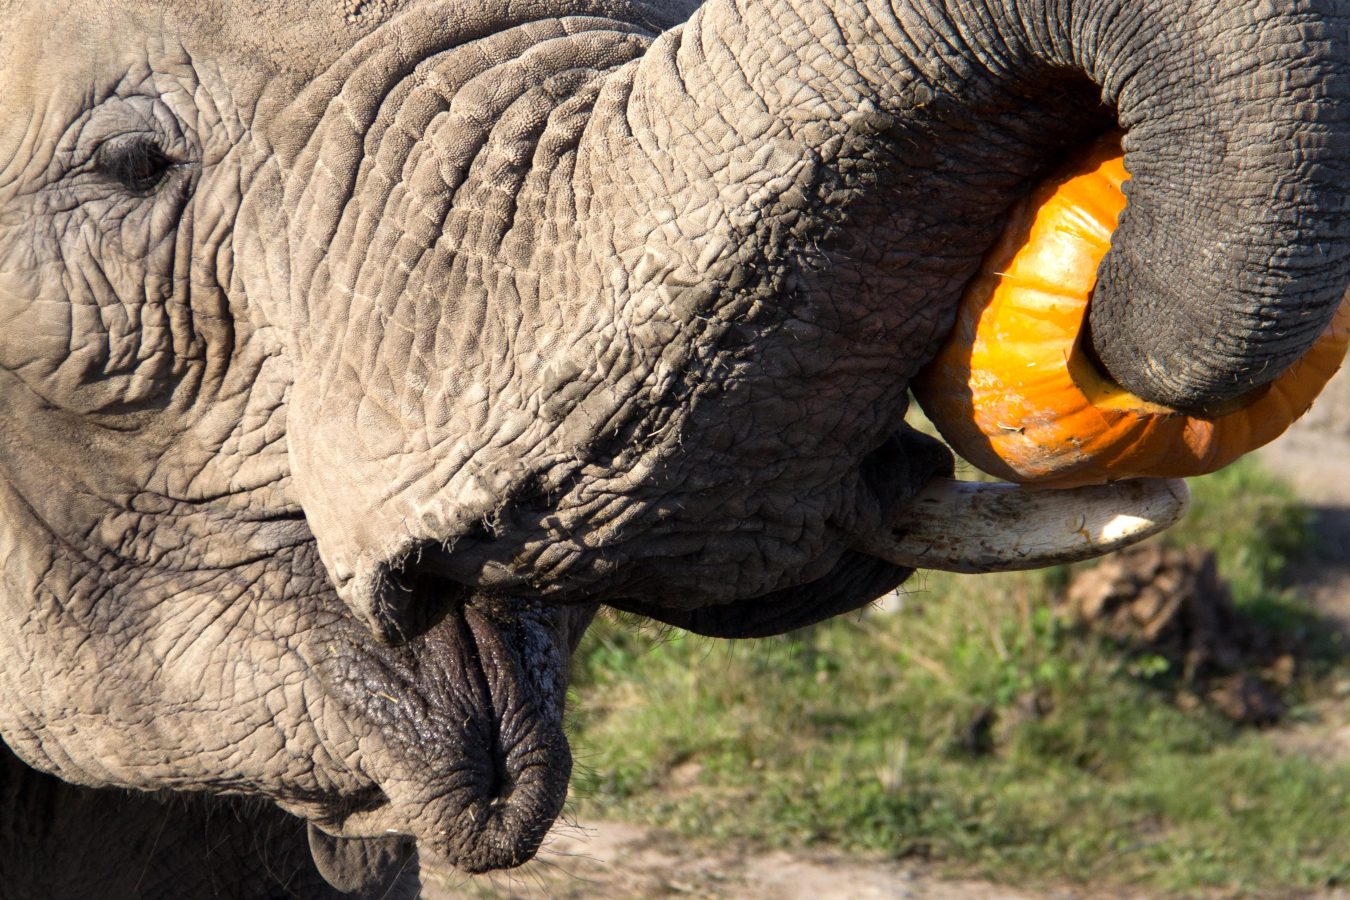 Elephant eating a pumpkin jack-o-lantern.